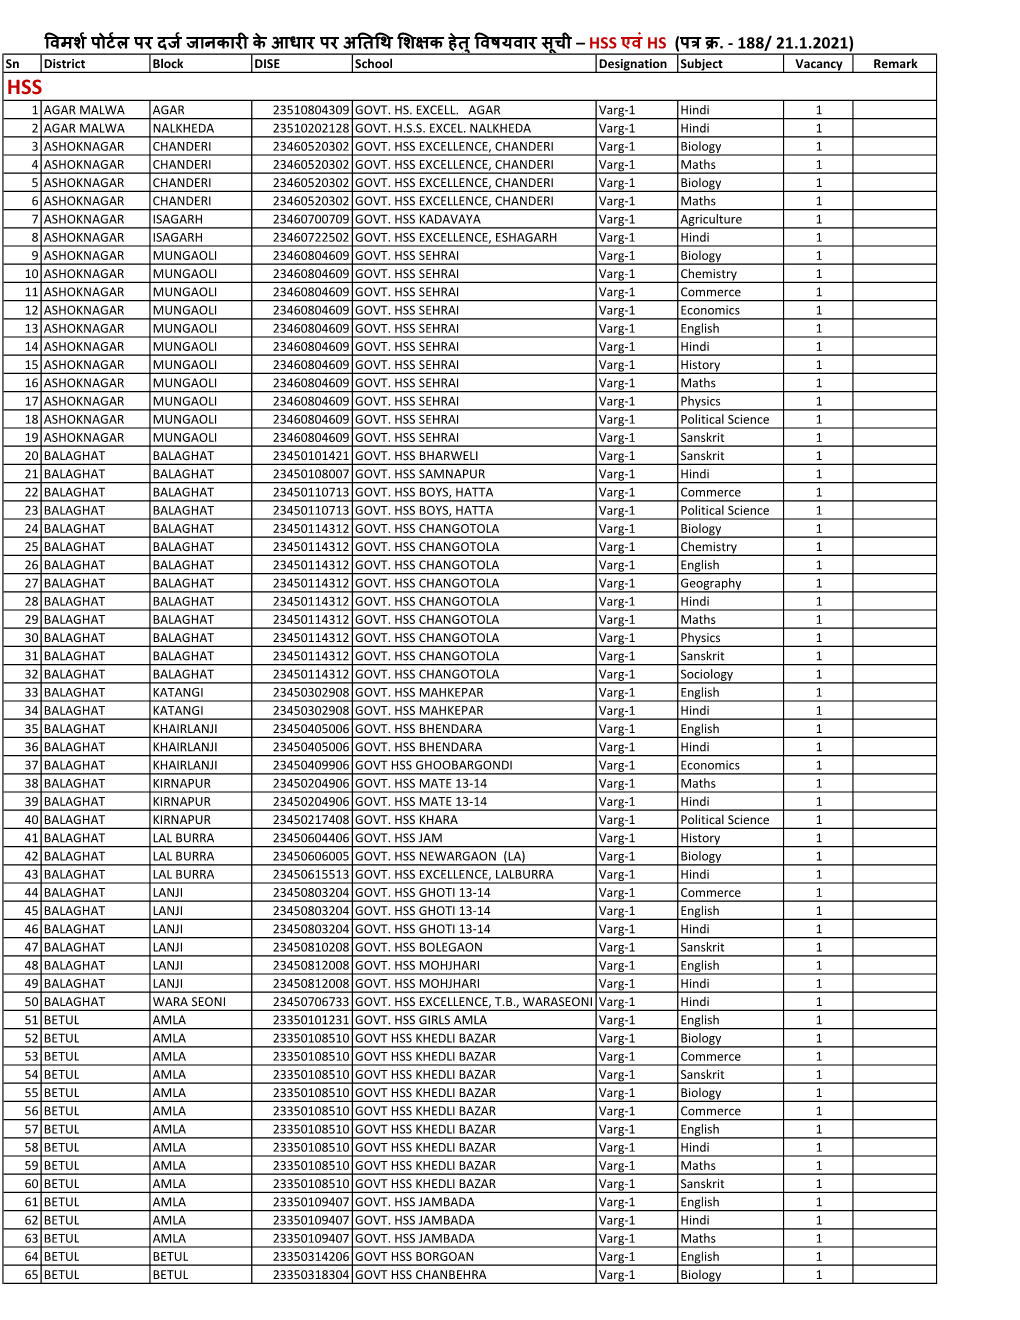 HS and HSS Guest 4Th List As Per NIC Format.Xlsx